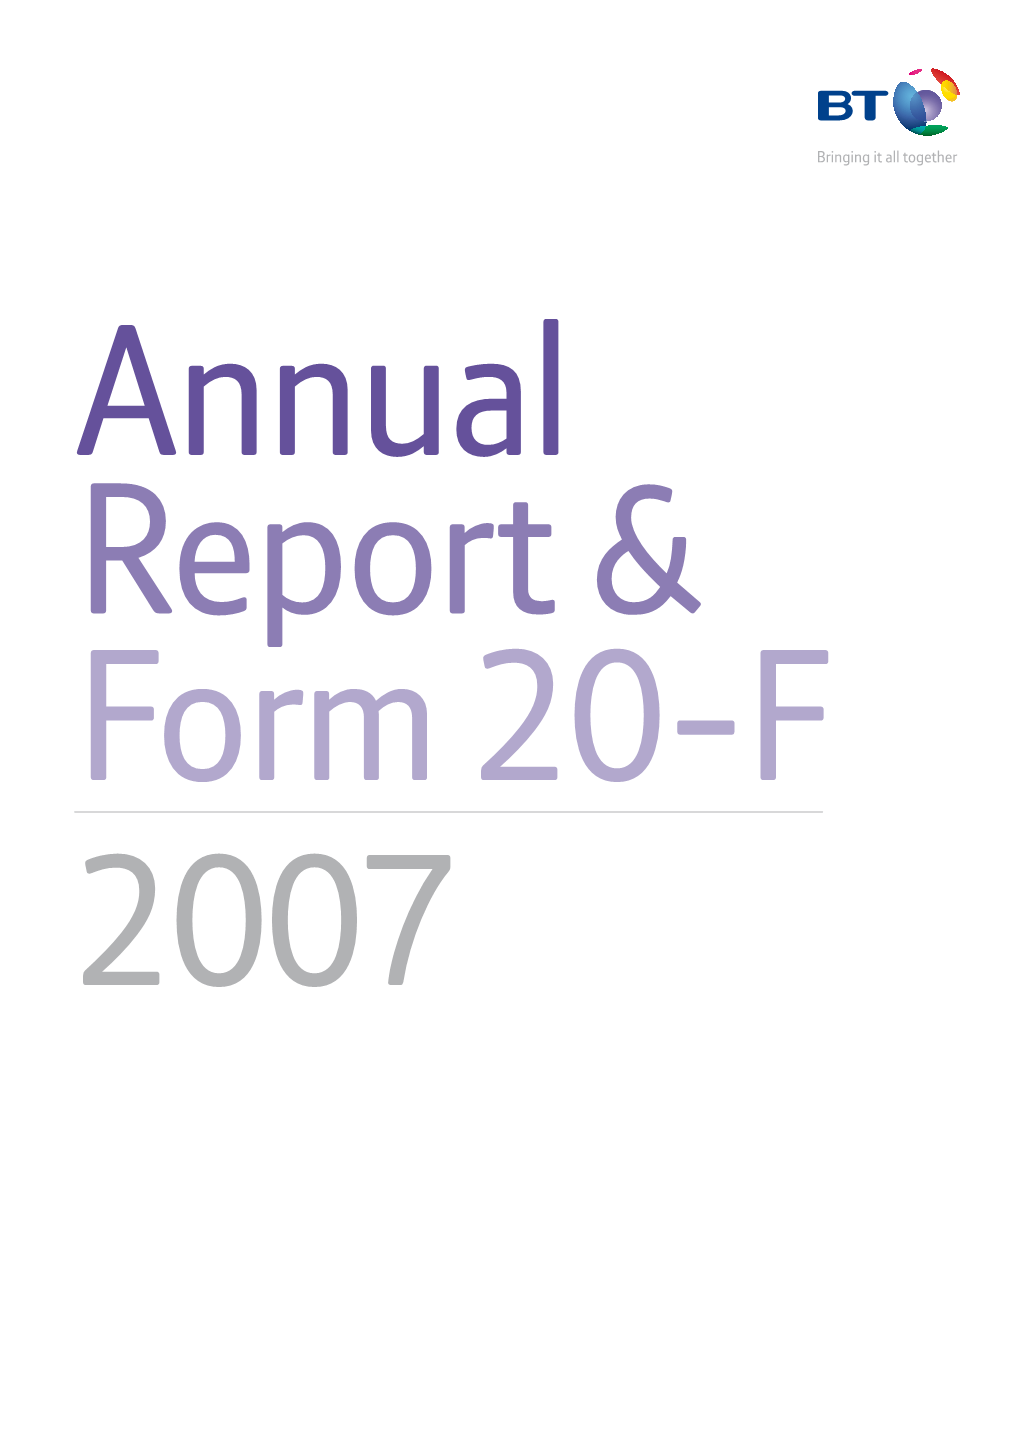 Annual Report & Form 20-F 2007